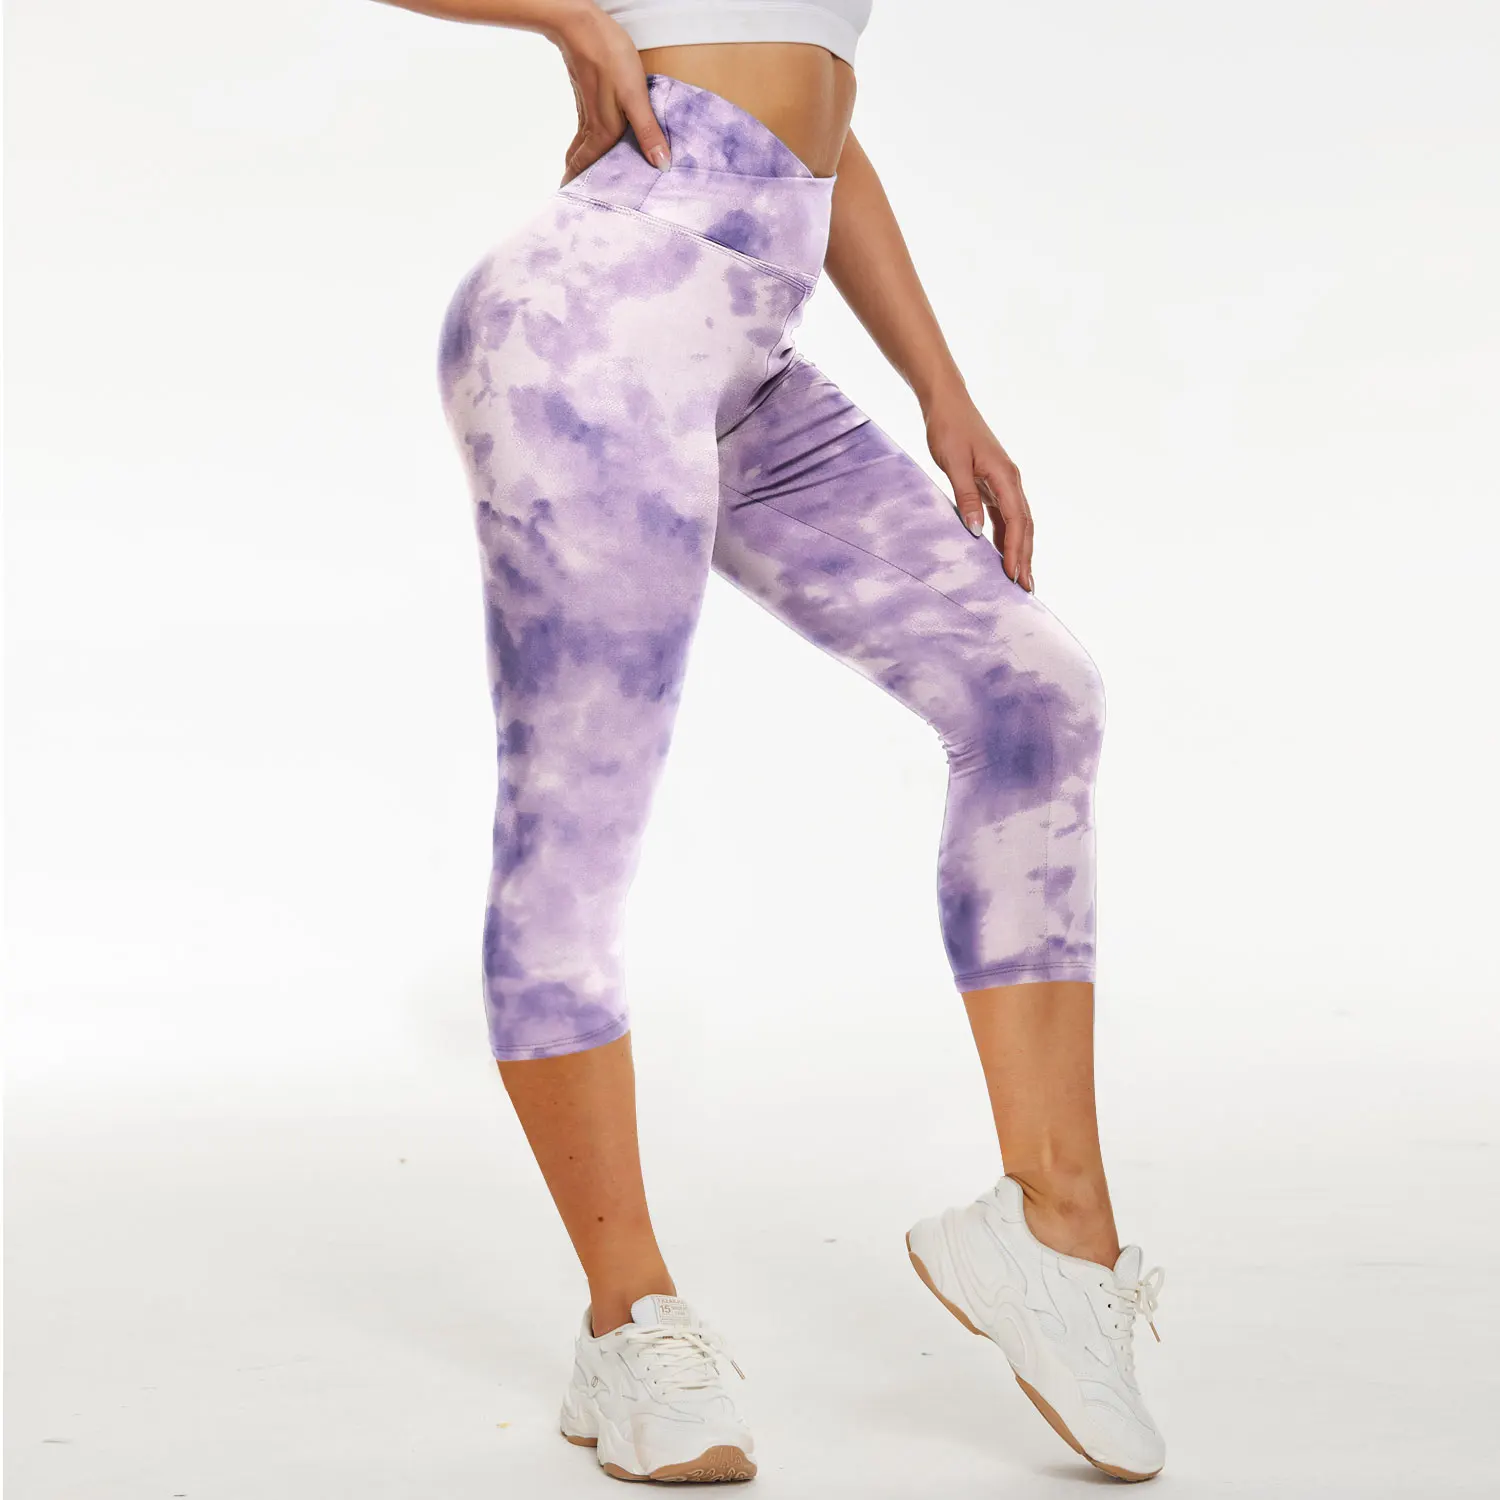 Women yoga pants Printed High Waist breathable fashion comfortable tie dye capri Leggings